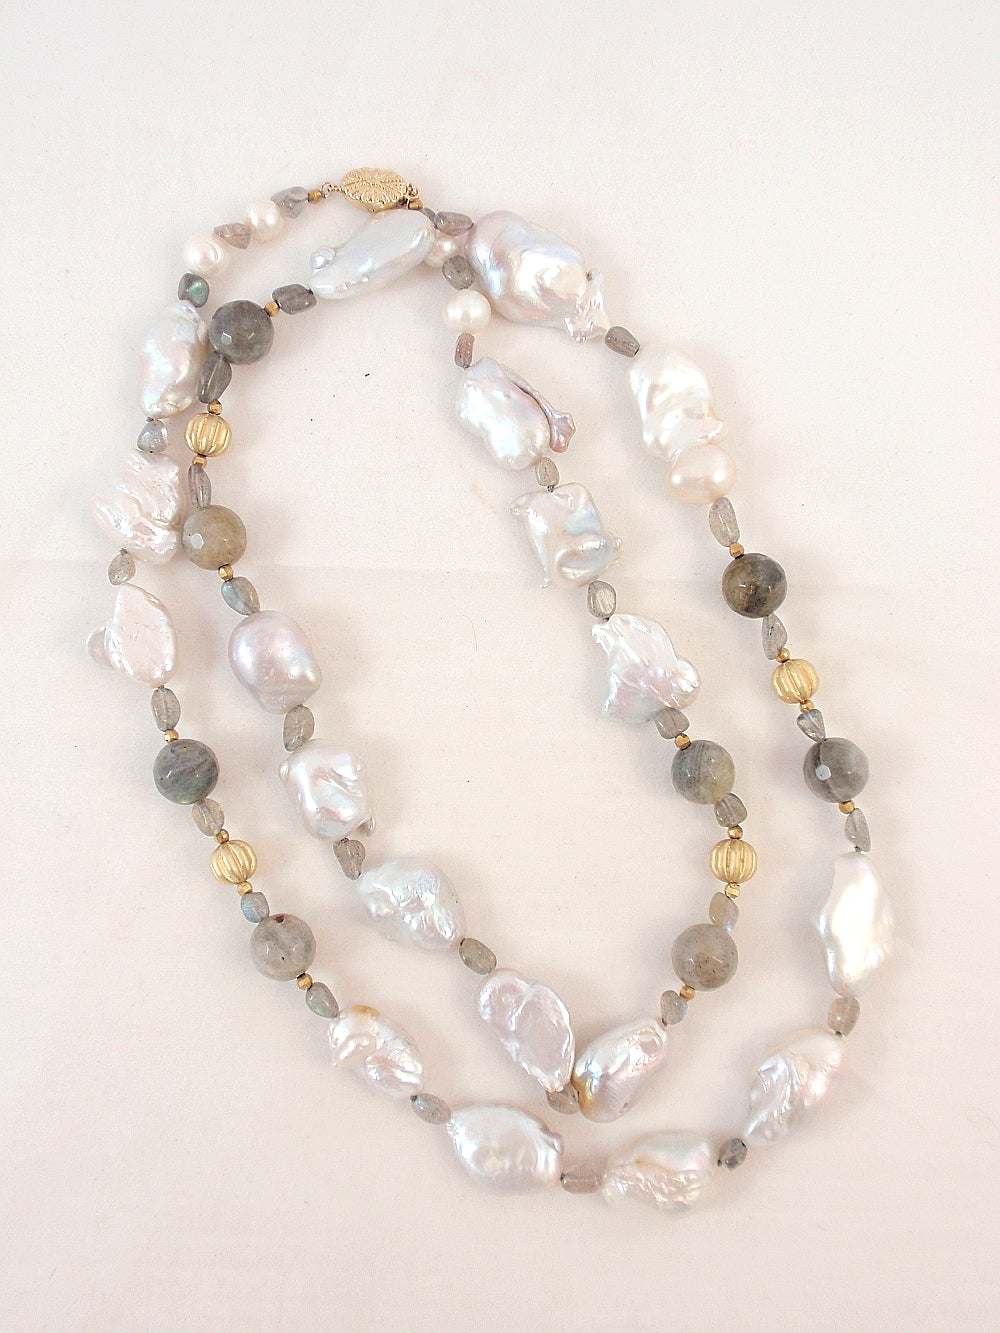 Leighton Reeve, Baroque Pearls and Labradorite Necklace